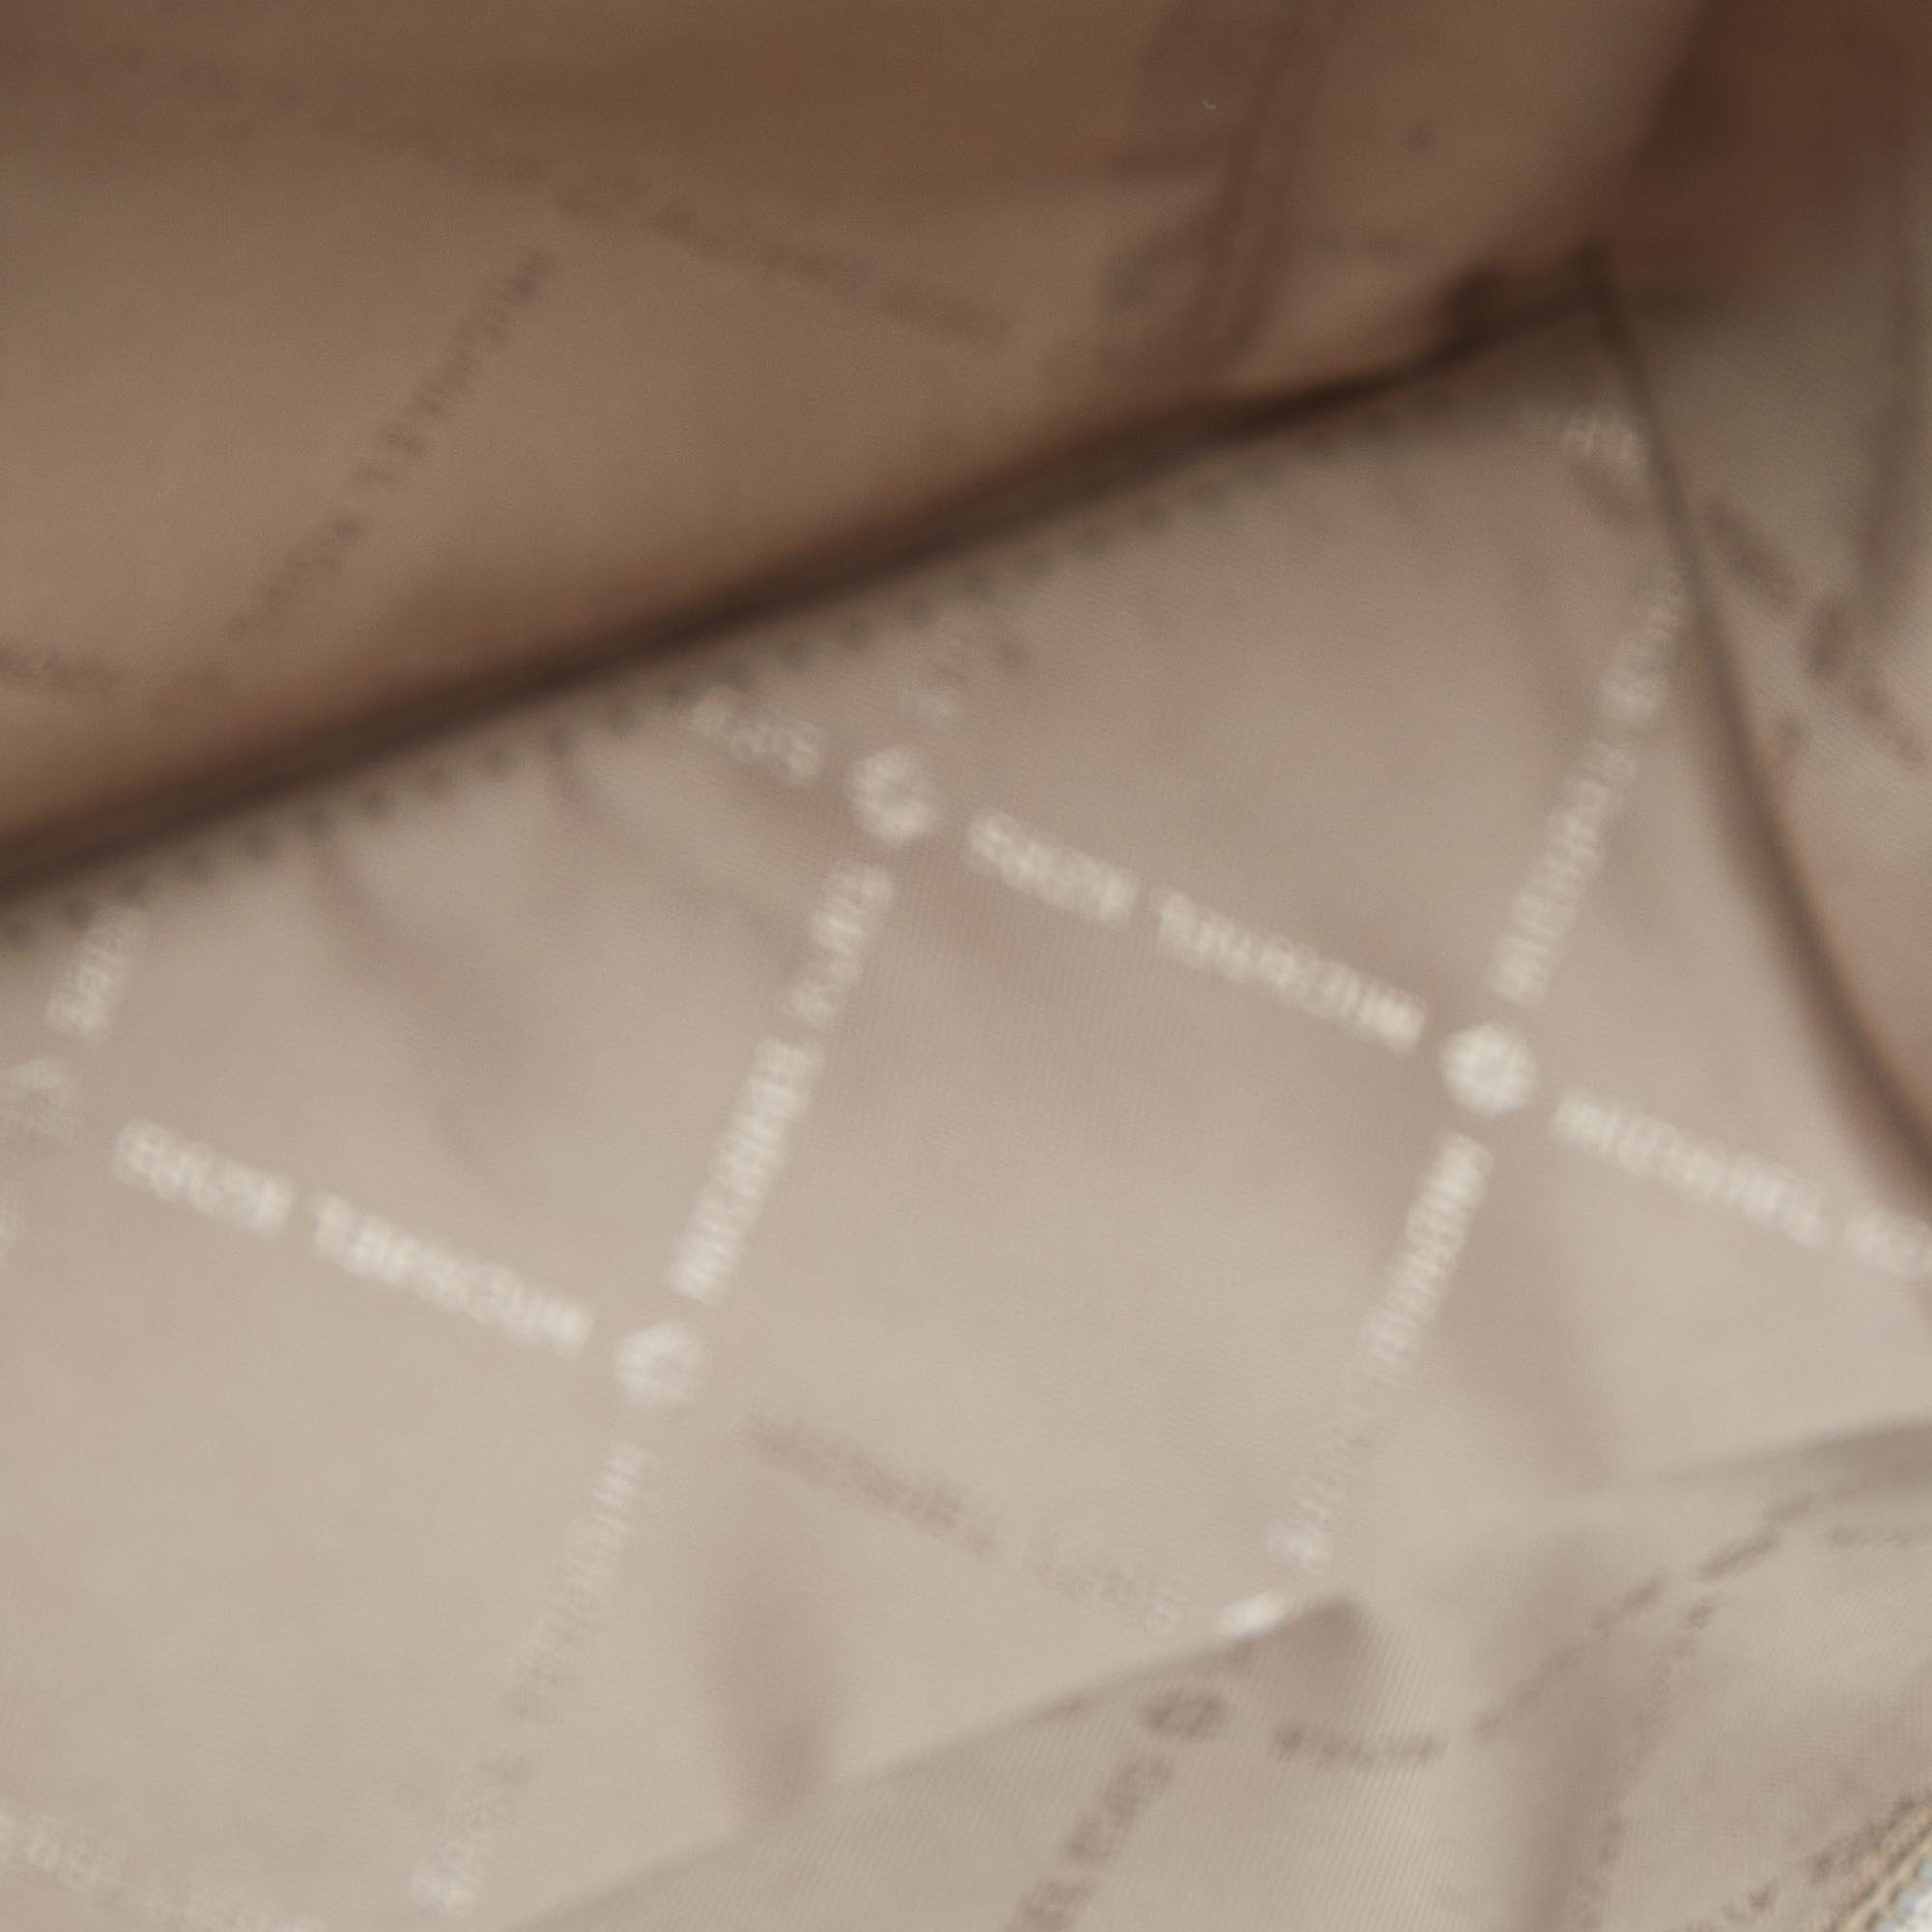 Michael Kors White Saffiano Studded Leather Small Selma Crossbody Bag